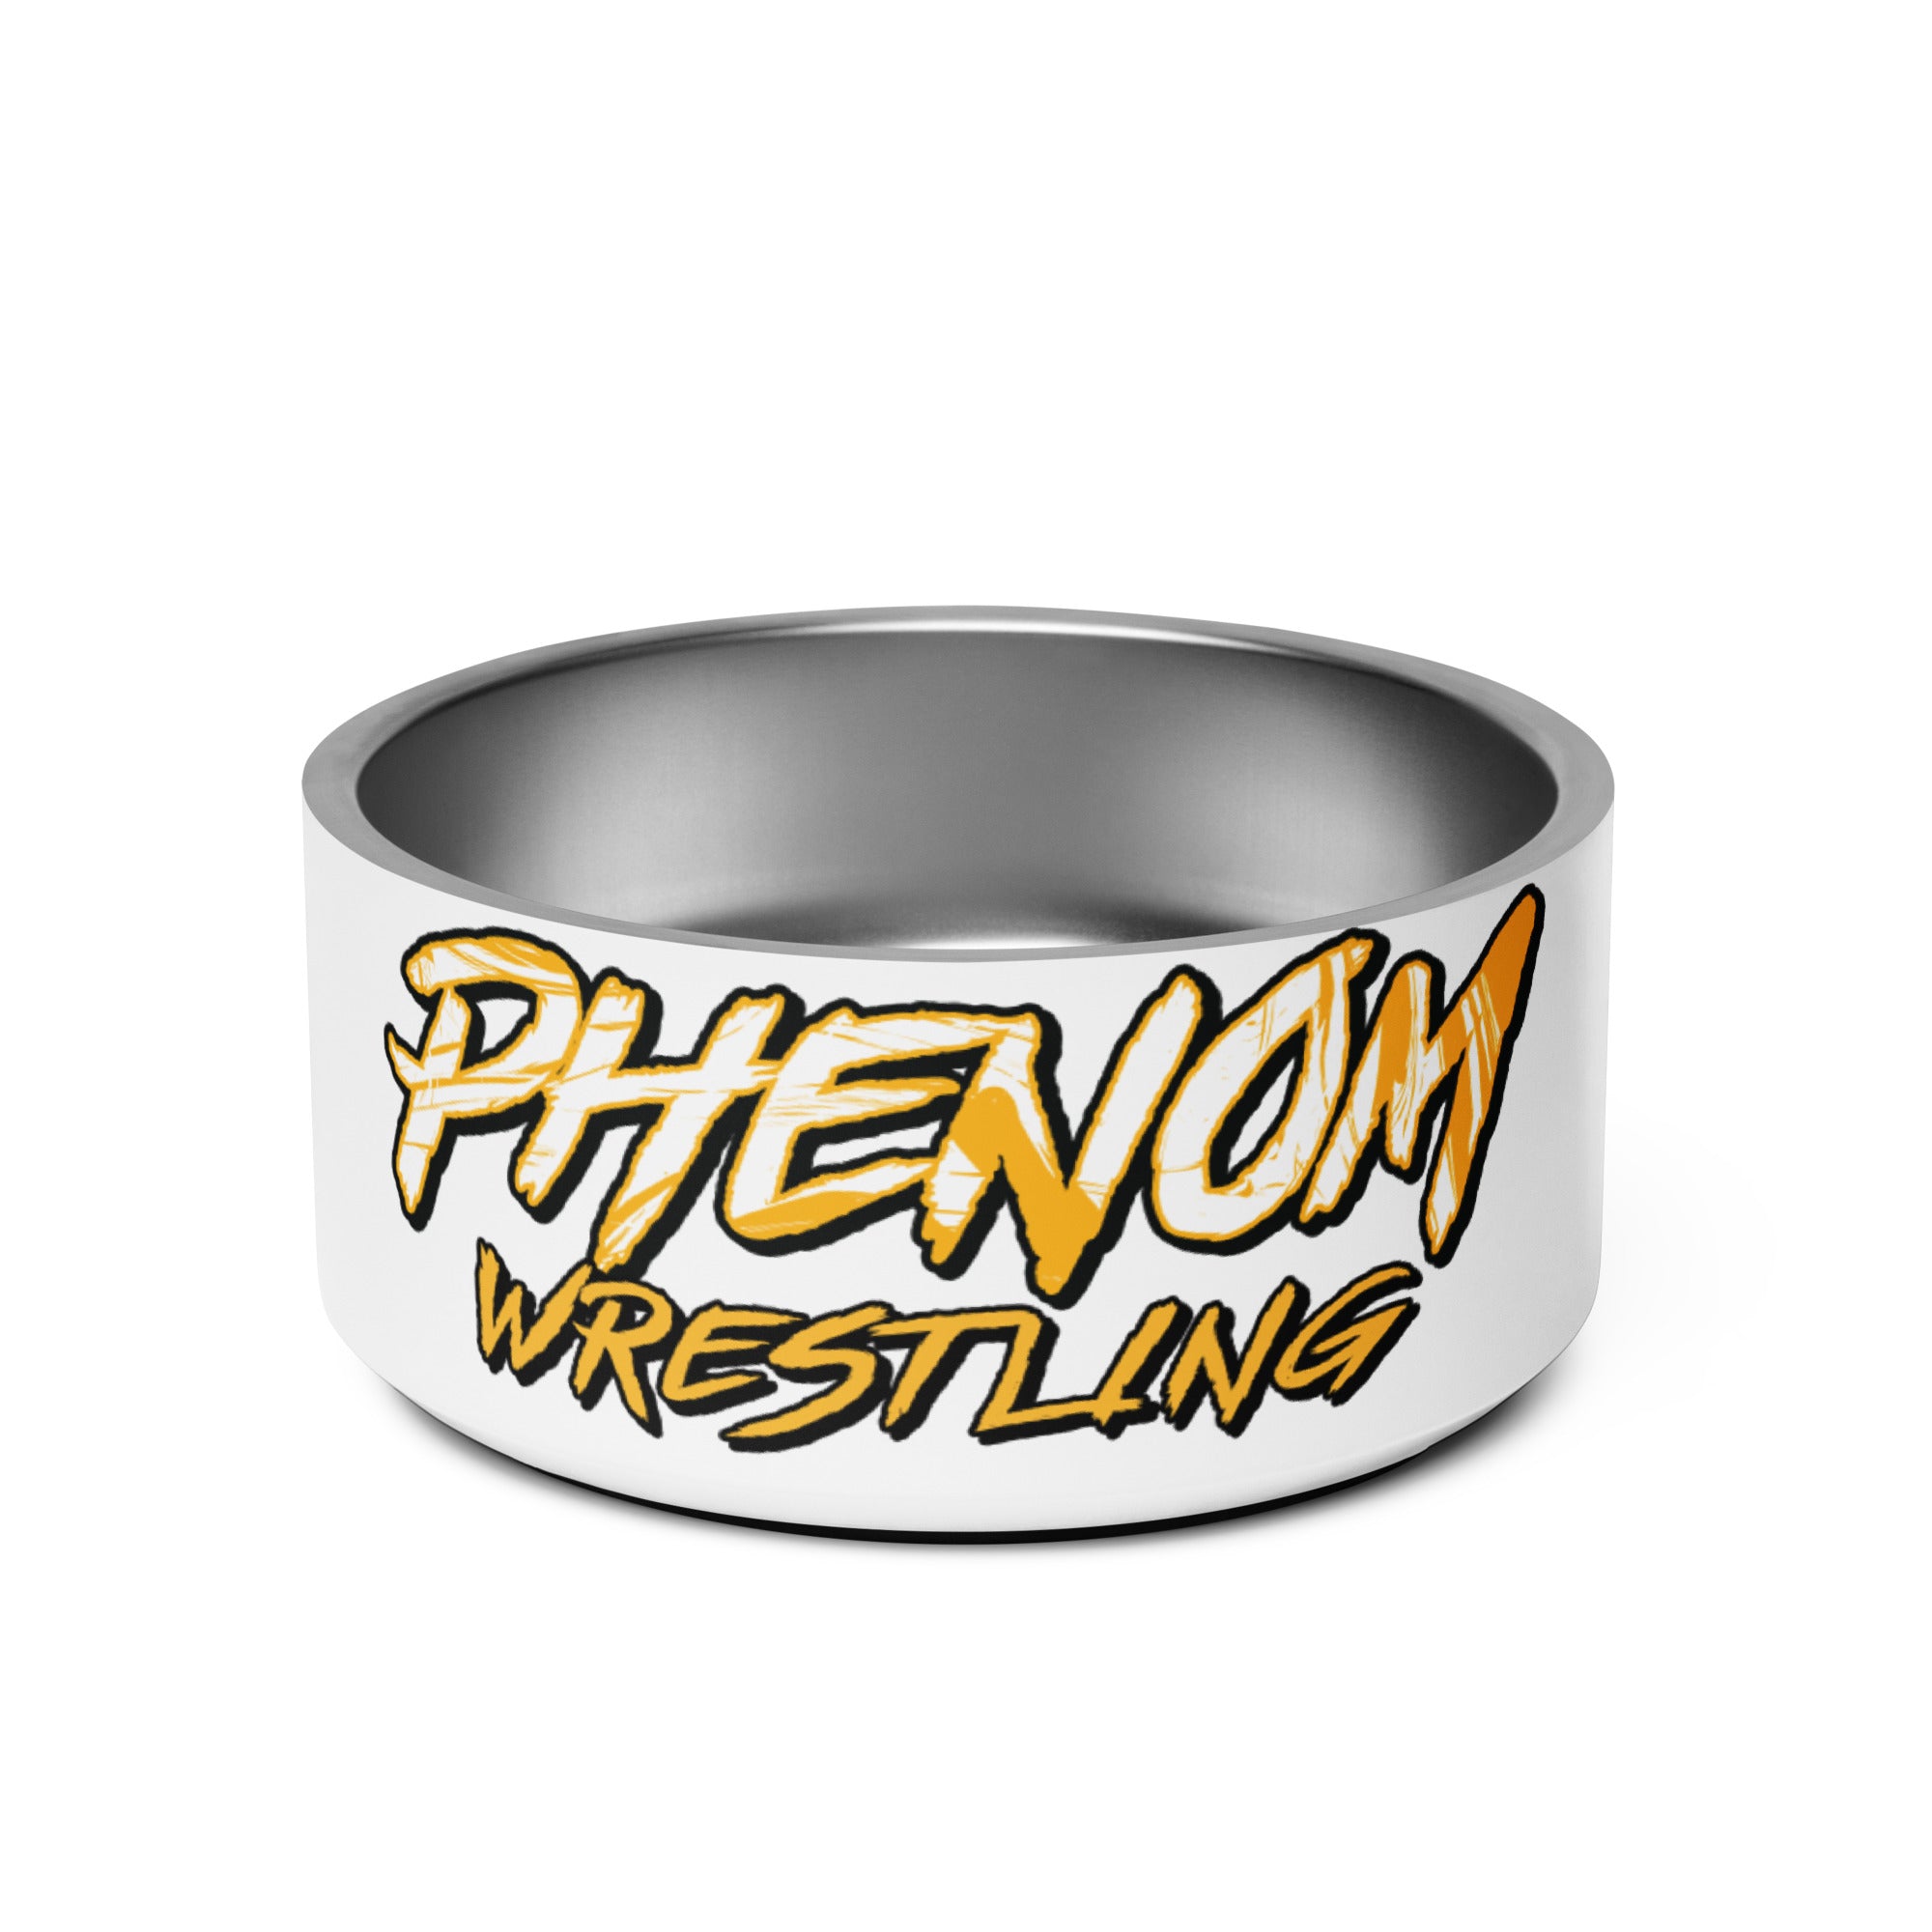 Phenom Wrestling All Over Print Pet bowl